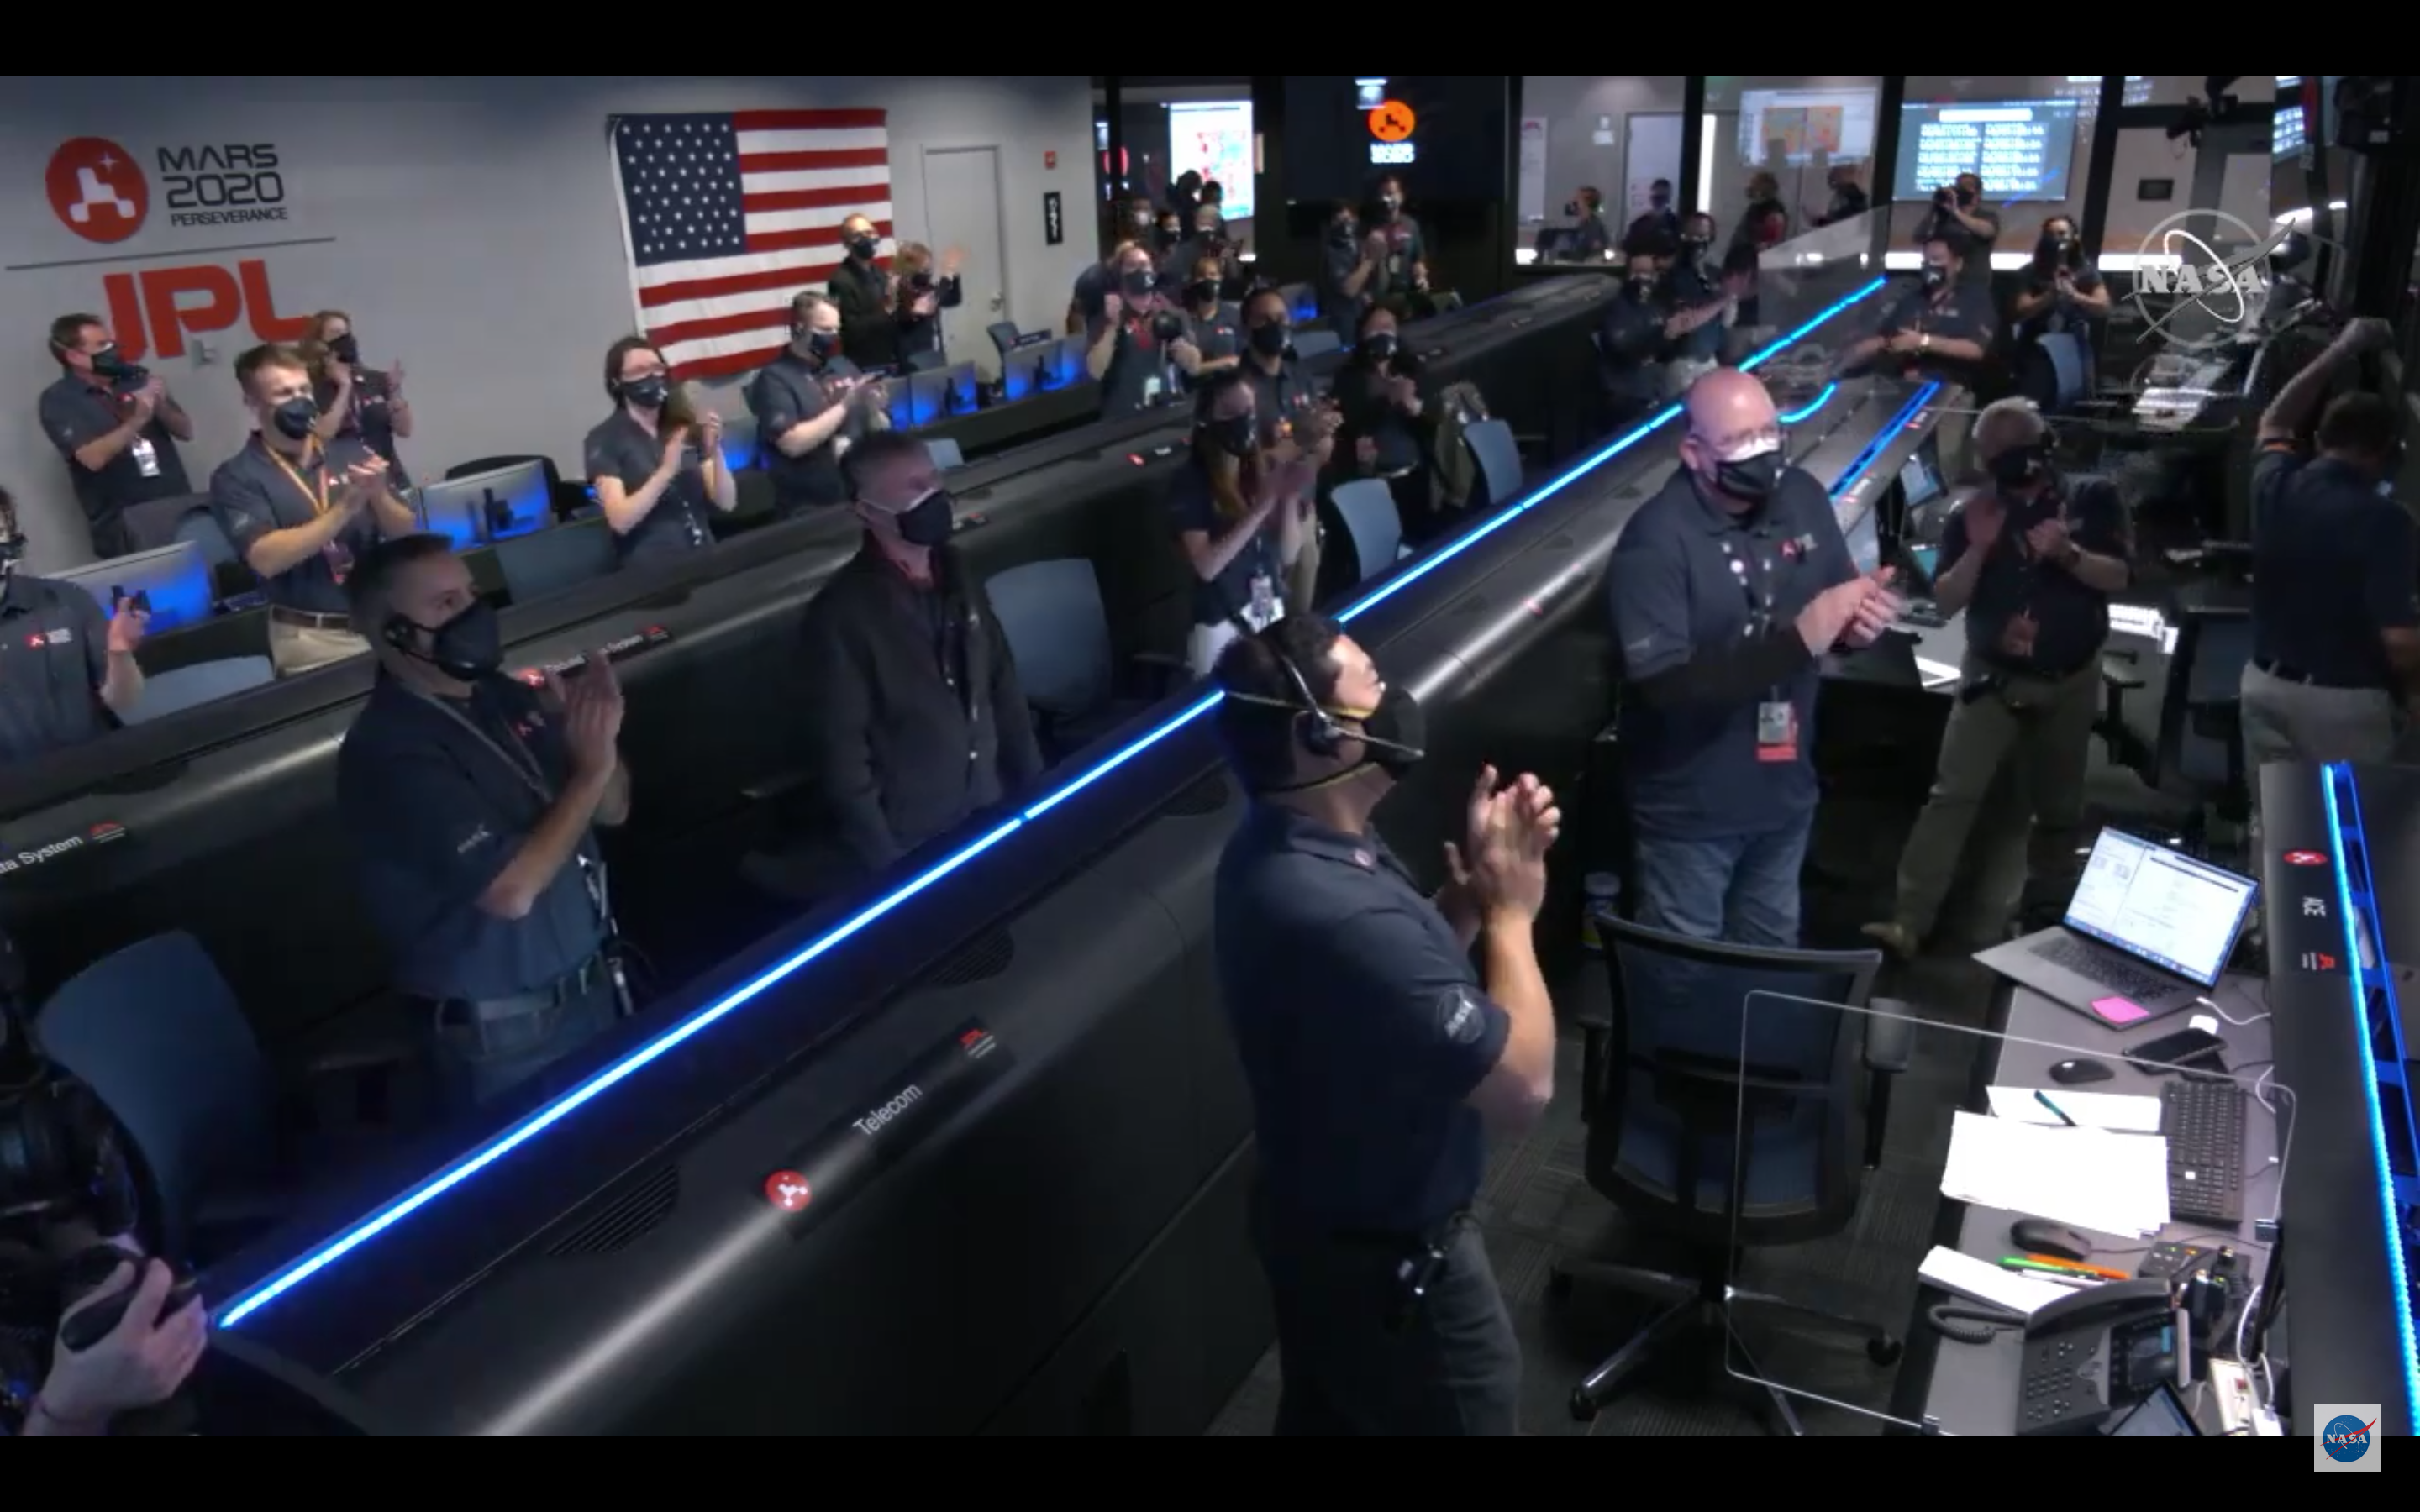 The NASA JPL crew applauding the successful landing